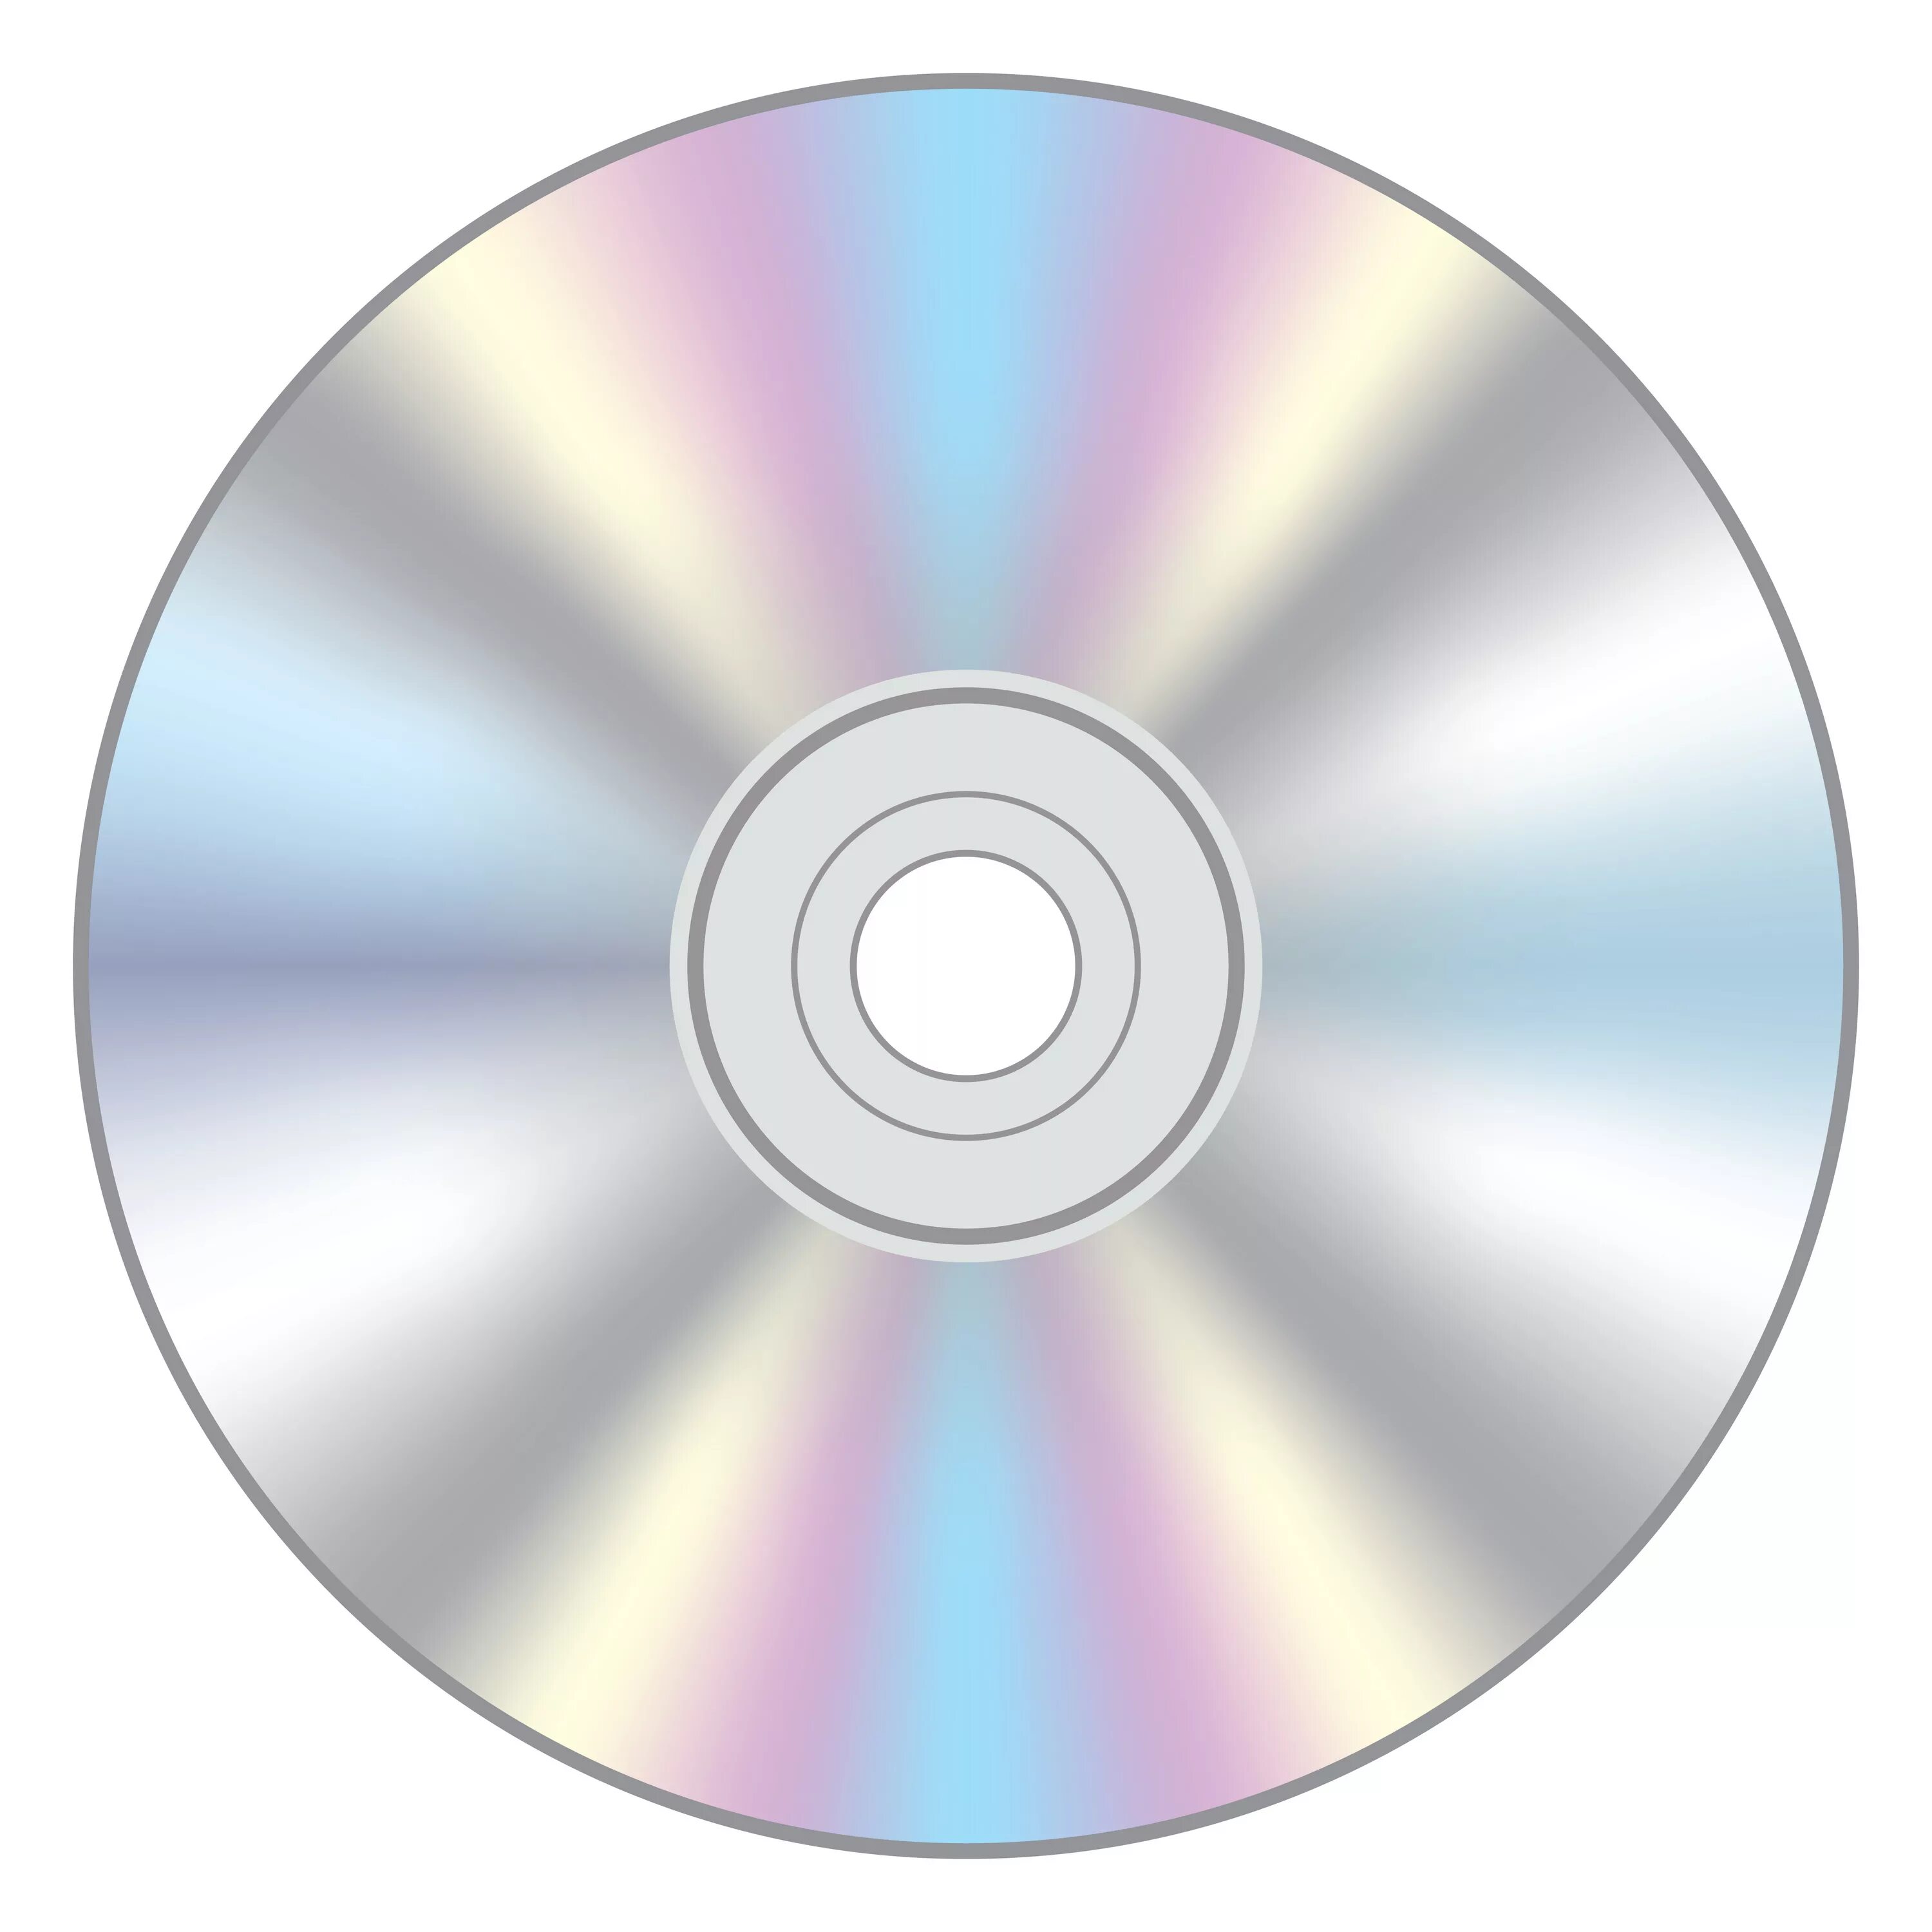 Cd pictures. Компакт диск. Диск векторный. Компакт диск вектор. Компакт-диски CD.